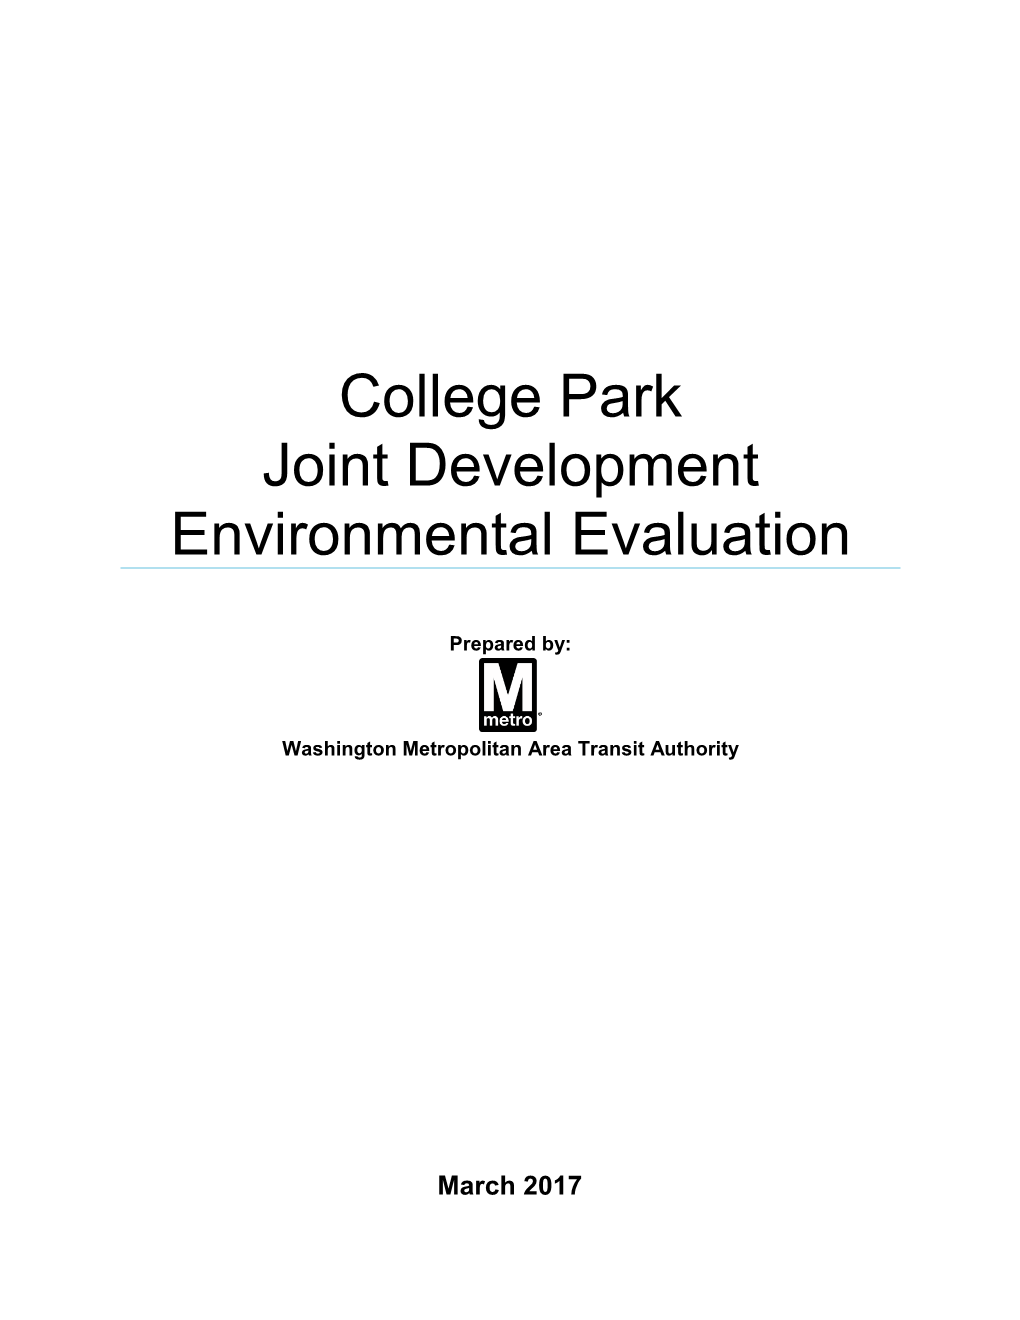 College Park Joint Development Environmental Evaluation